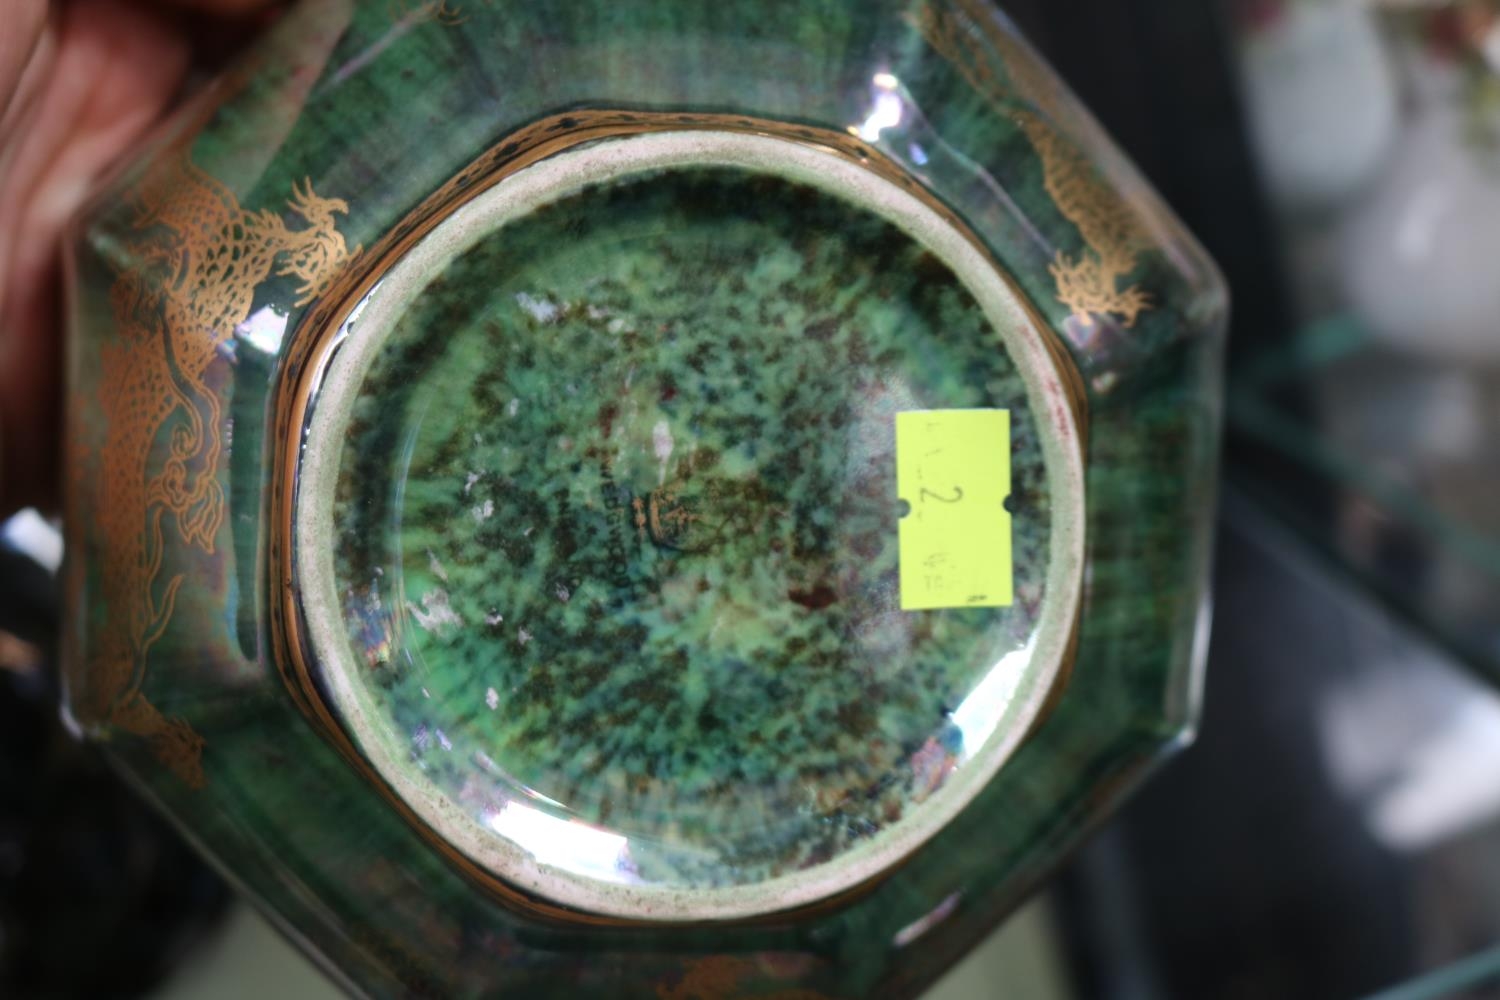 Wedgwood Fairyland Lustre Octagonal Bowl 16cm in Diameter - Image 3 of 3